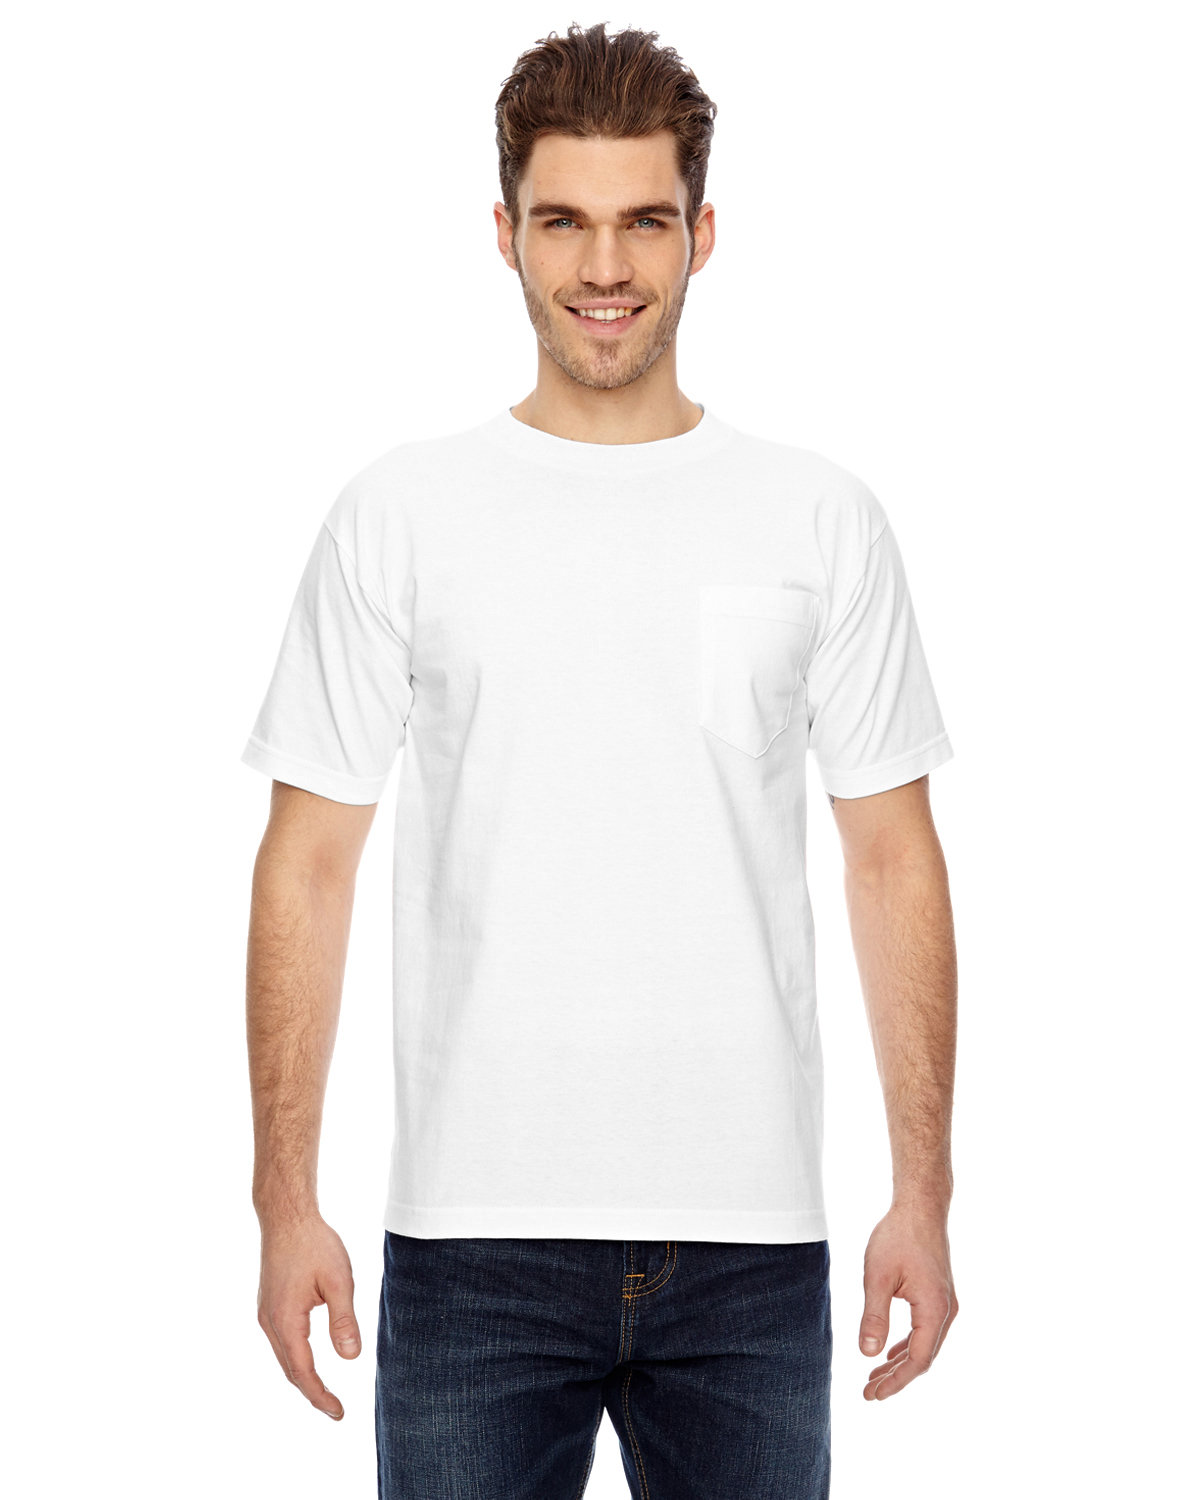 Bayside Adult 6.1 oz., 100% Cotton Pocket T-Shirt WHITE 